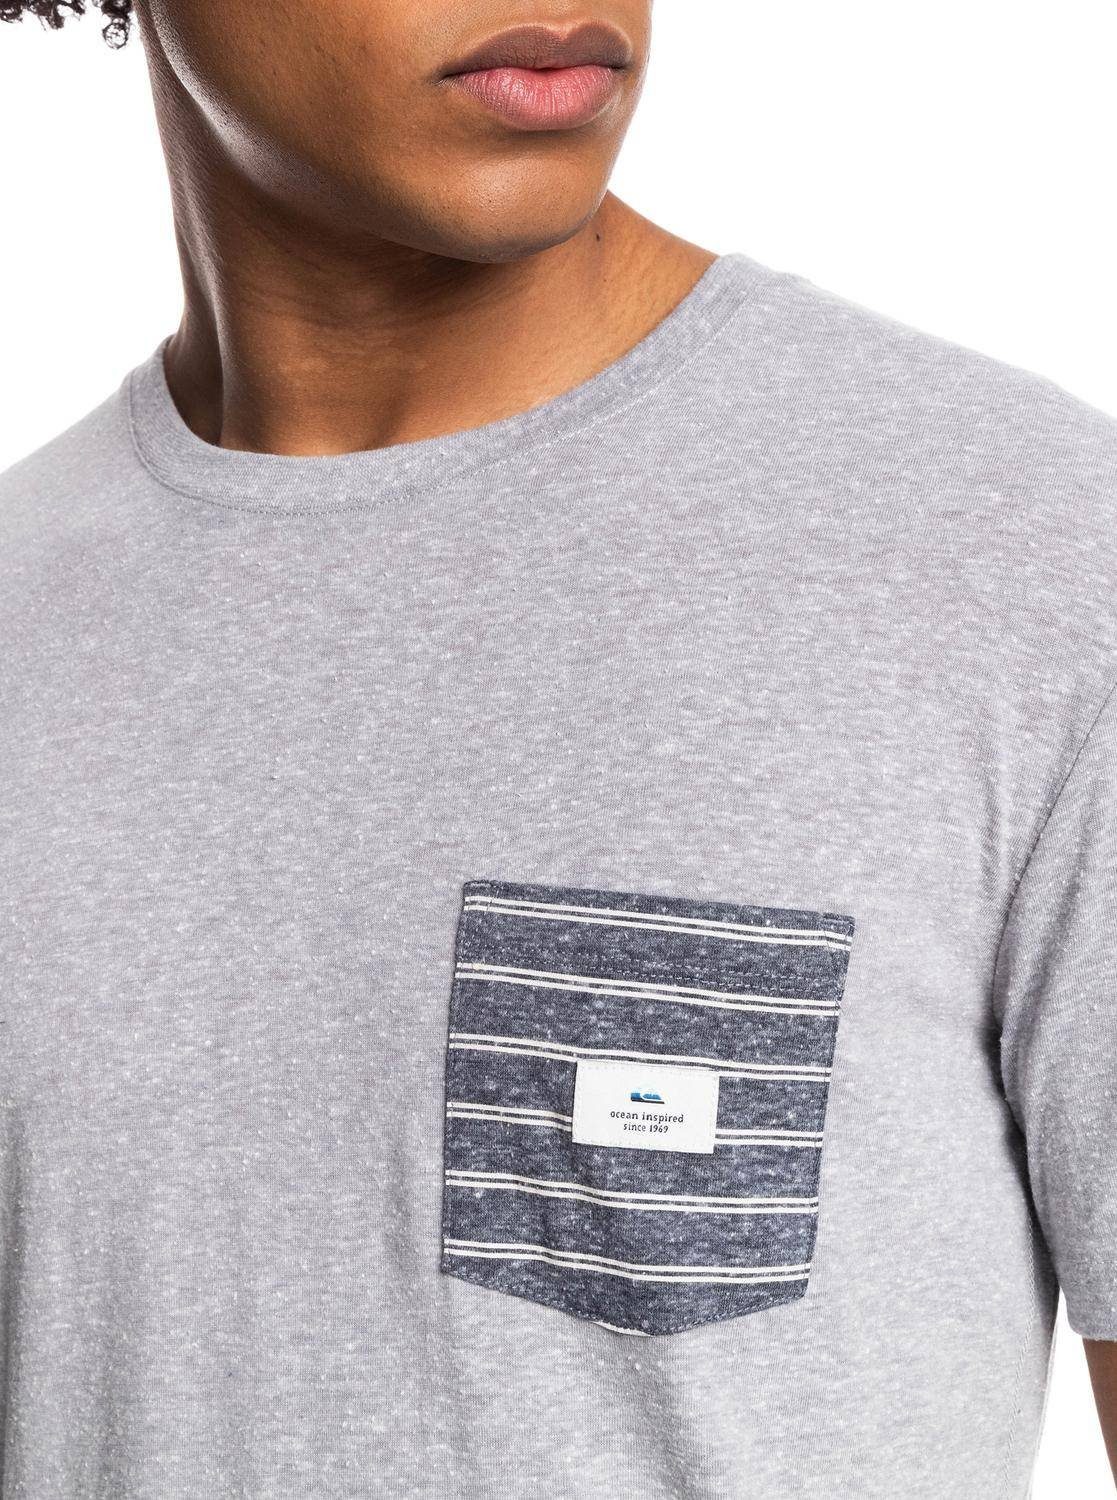 Quiksilver Print-Shirt Plan Retro für Taschen-T-Shirt - Männer